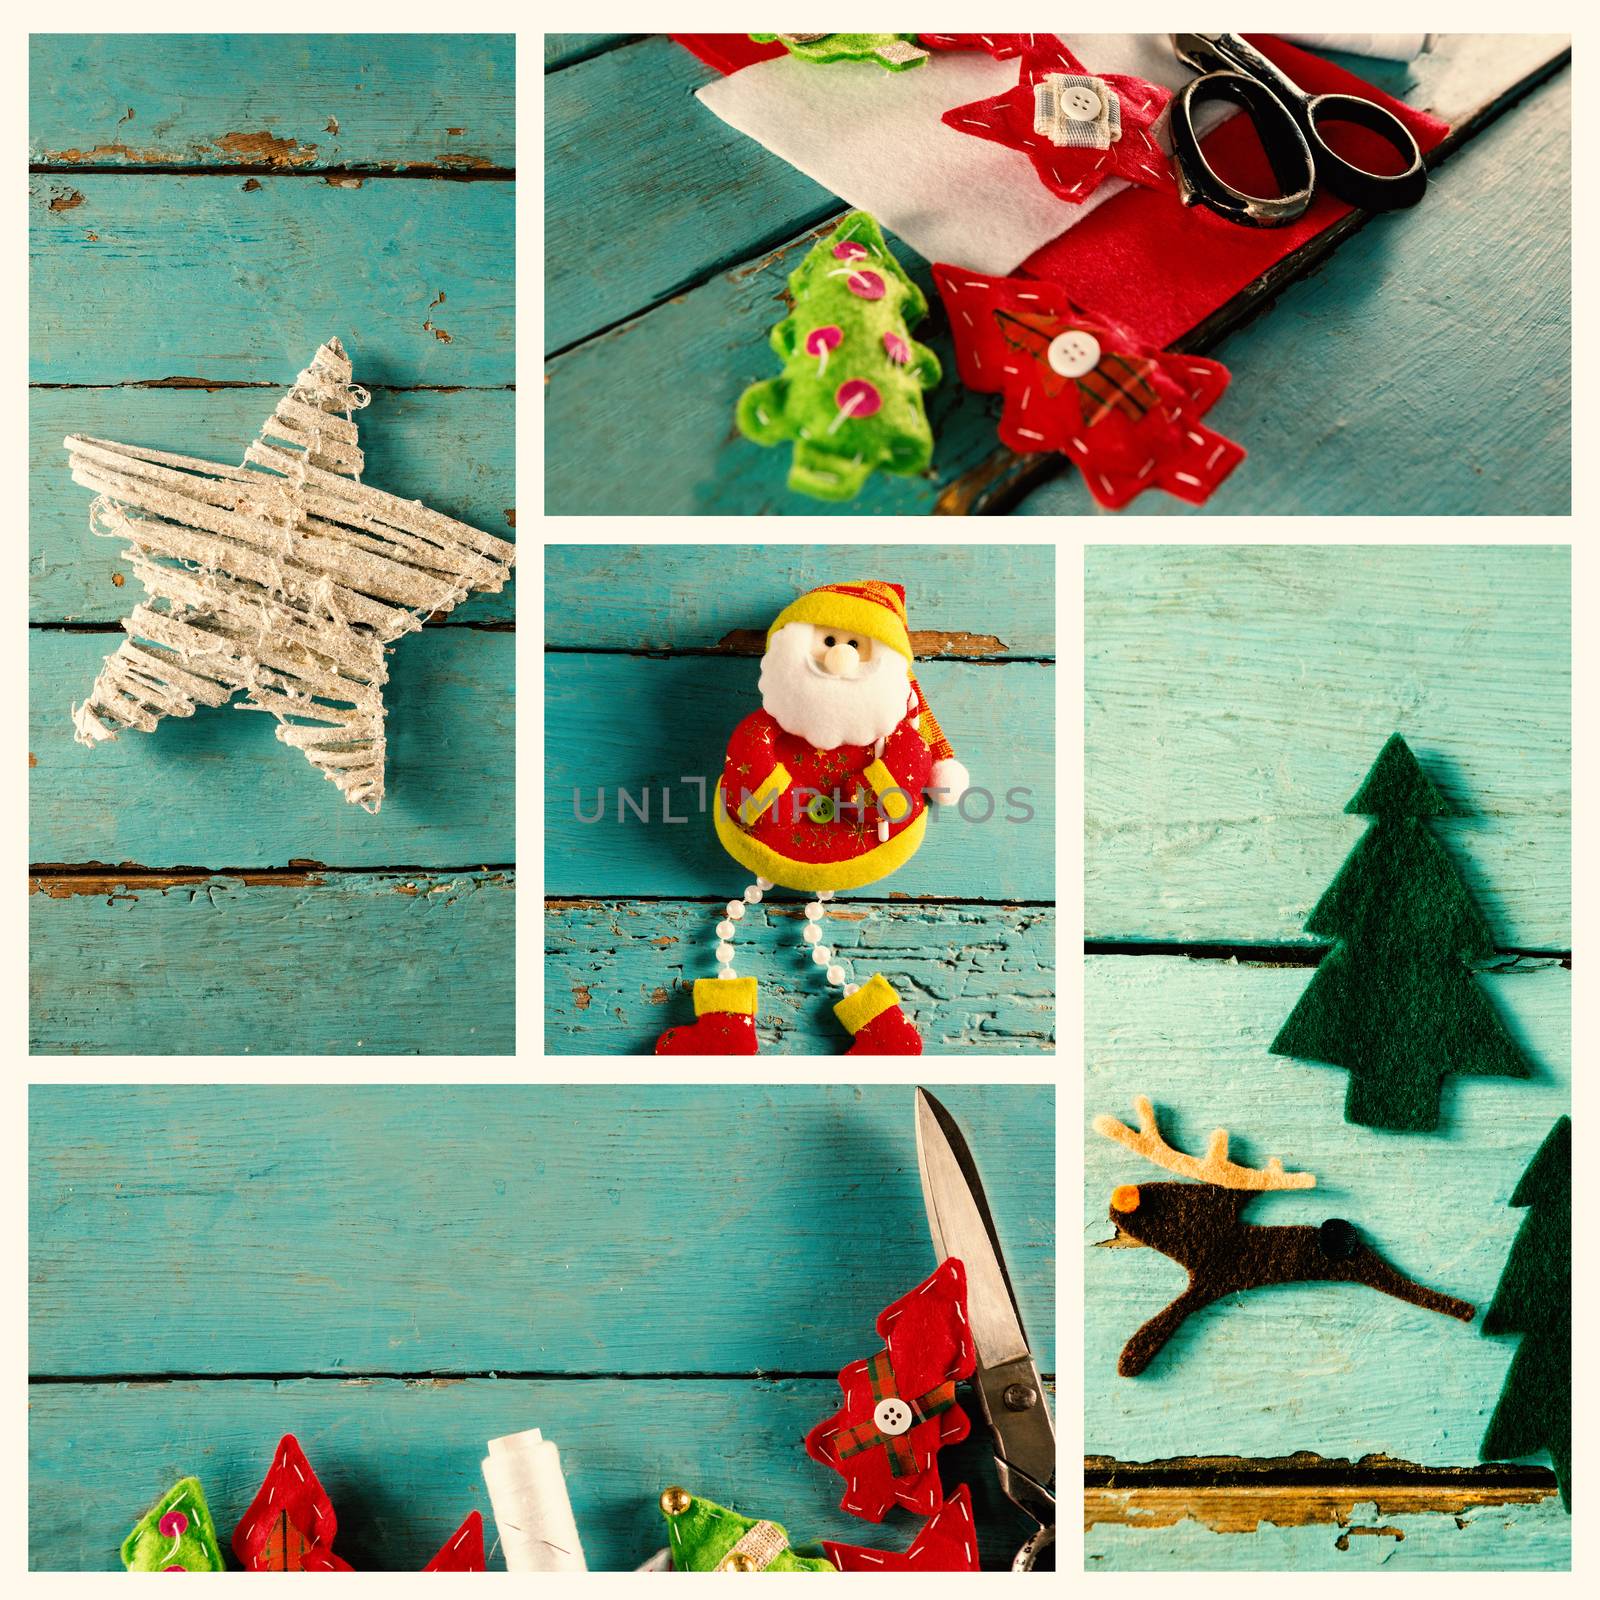 Christmas decoration by Wavebreakmedia